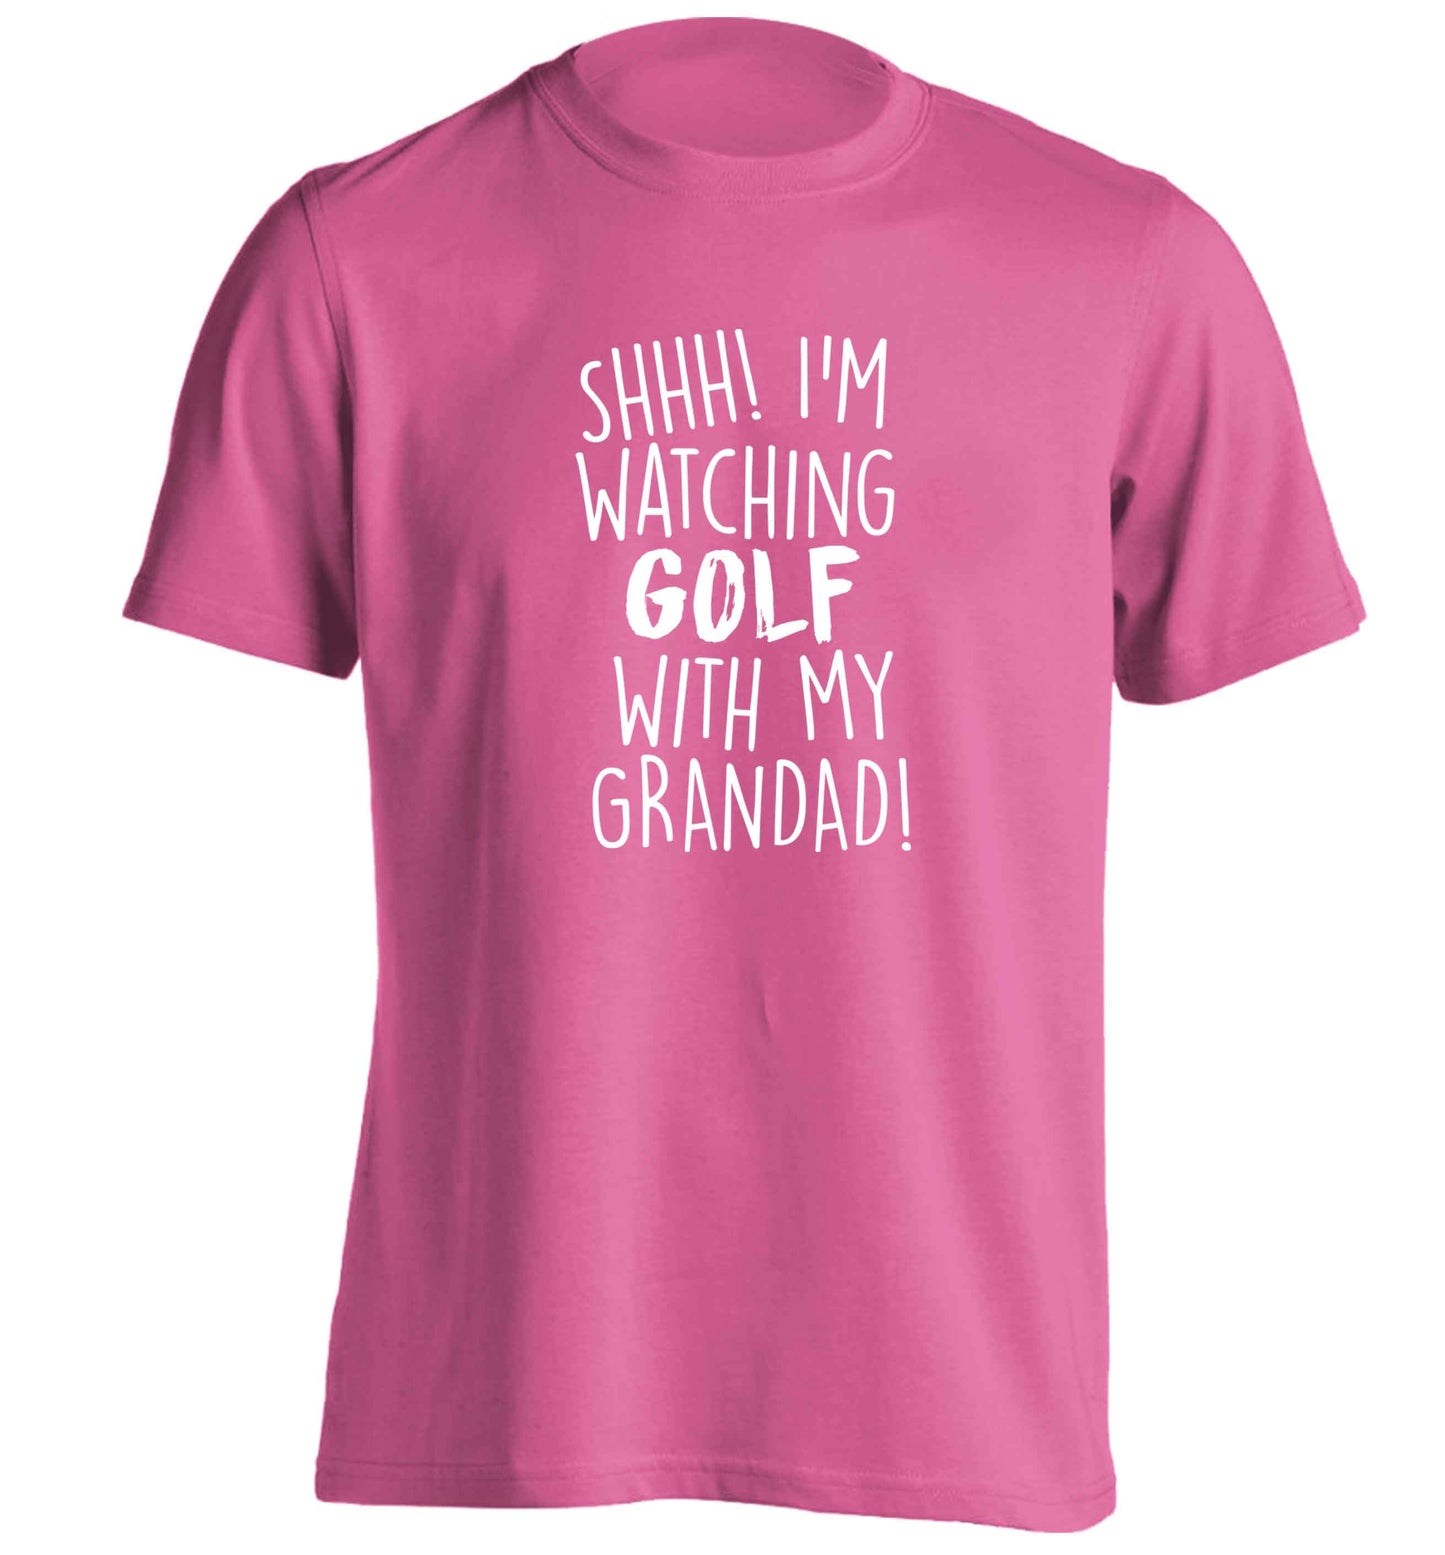 Shh I'm watching golf with my grandad adults unisex pink Tshirt 2XL